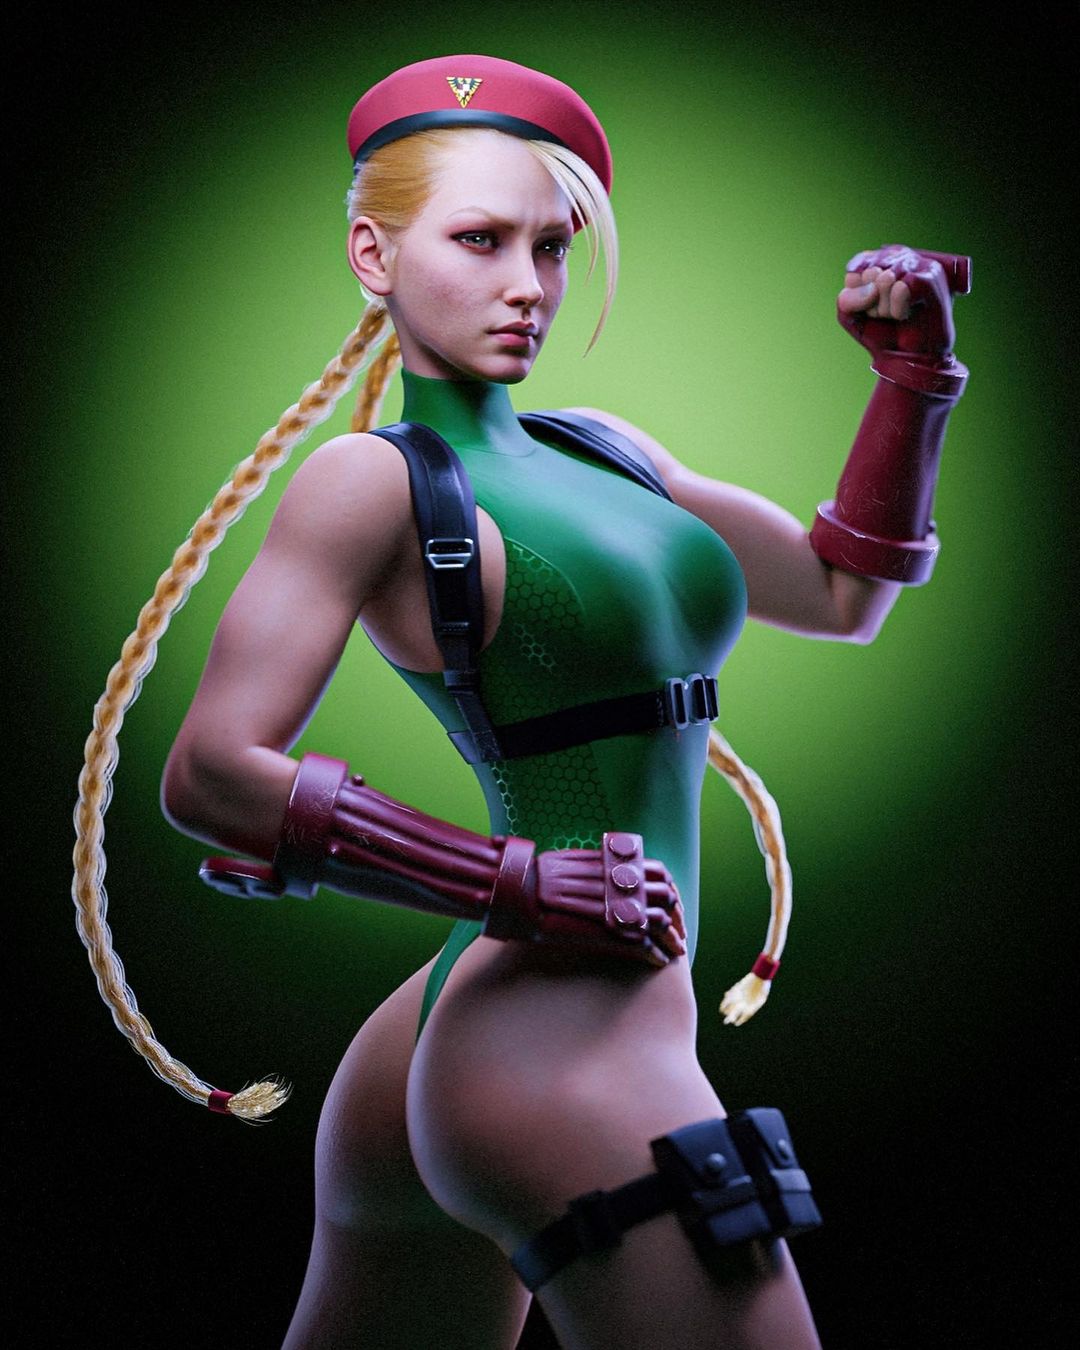 3D artist creates breathtaking artwork of Street Fighter gals